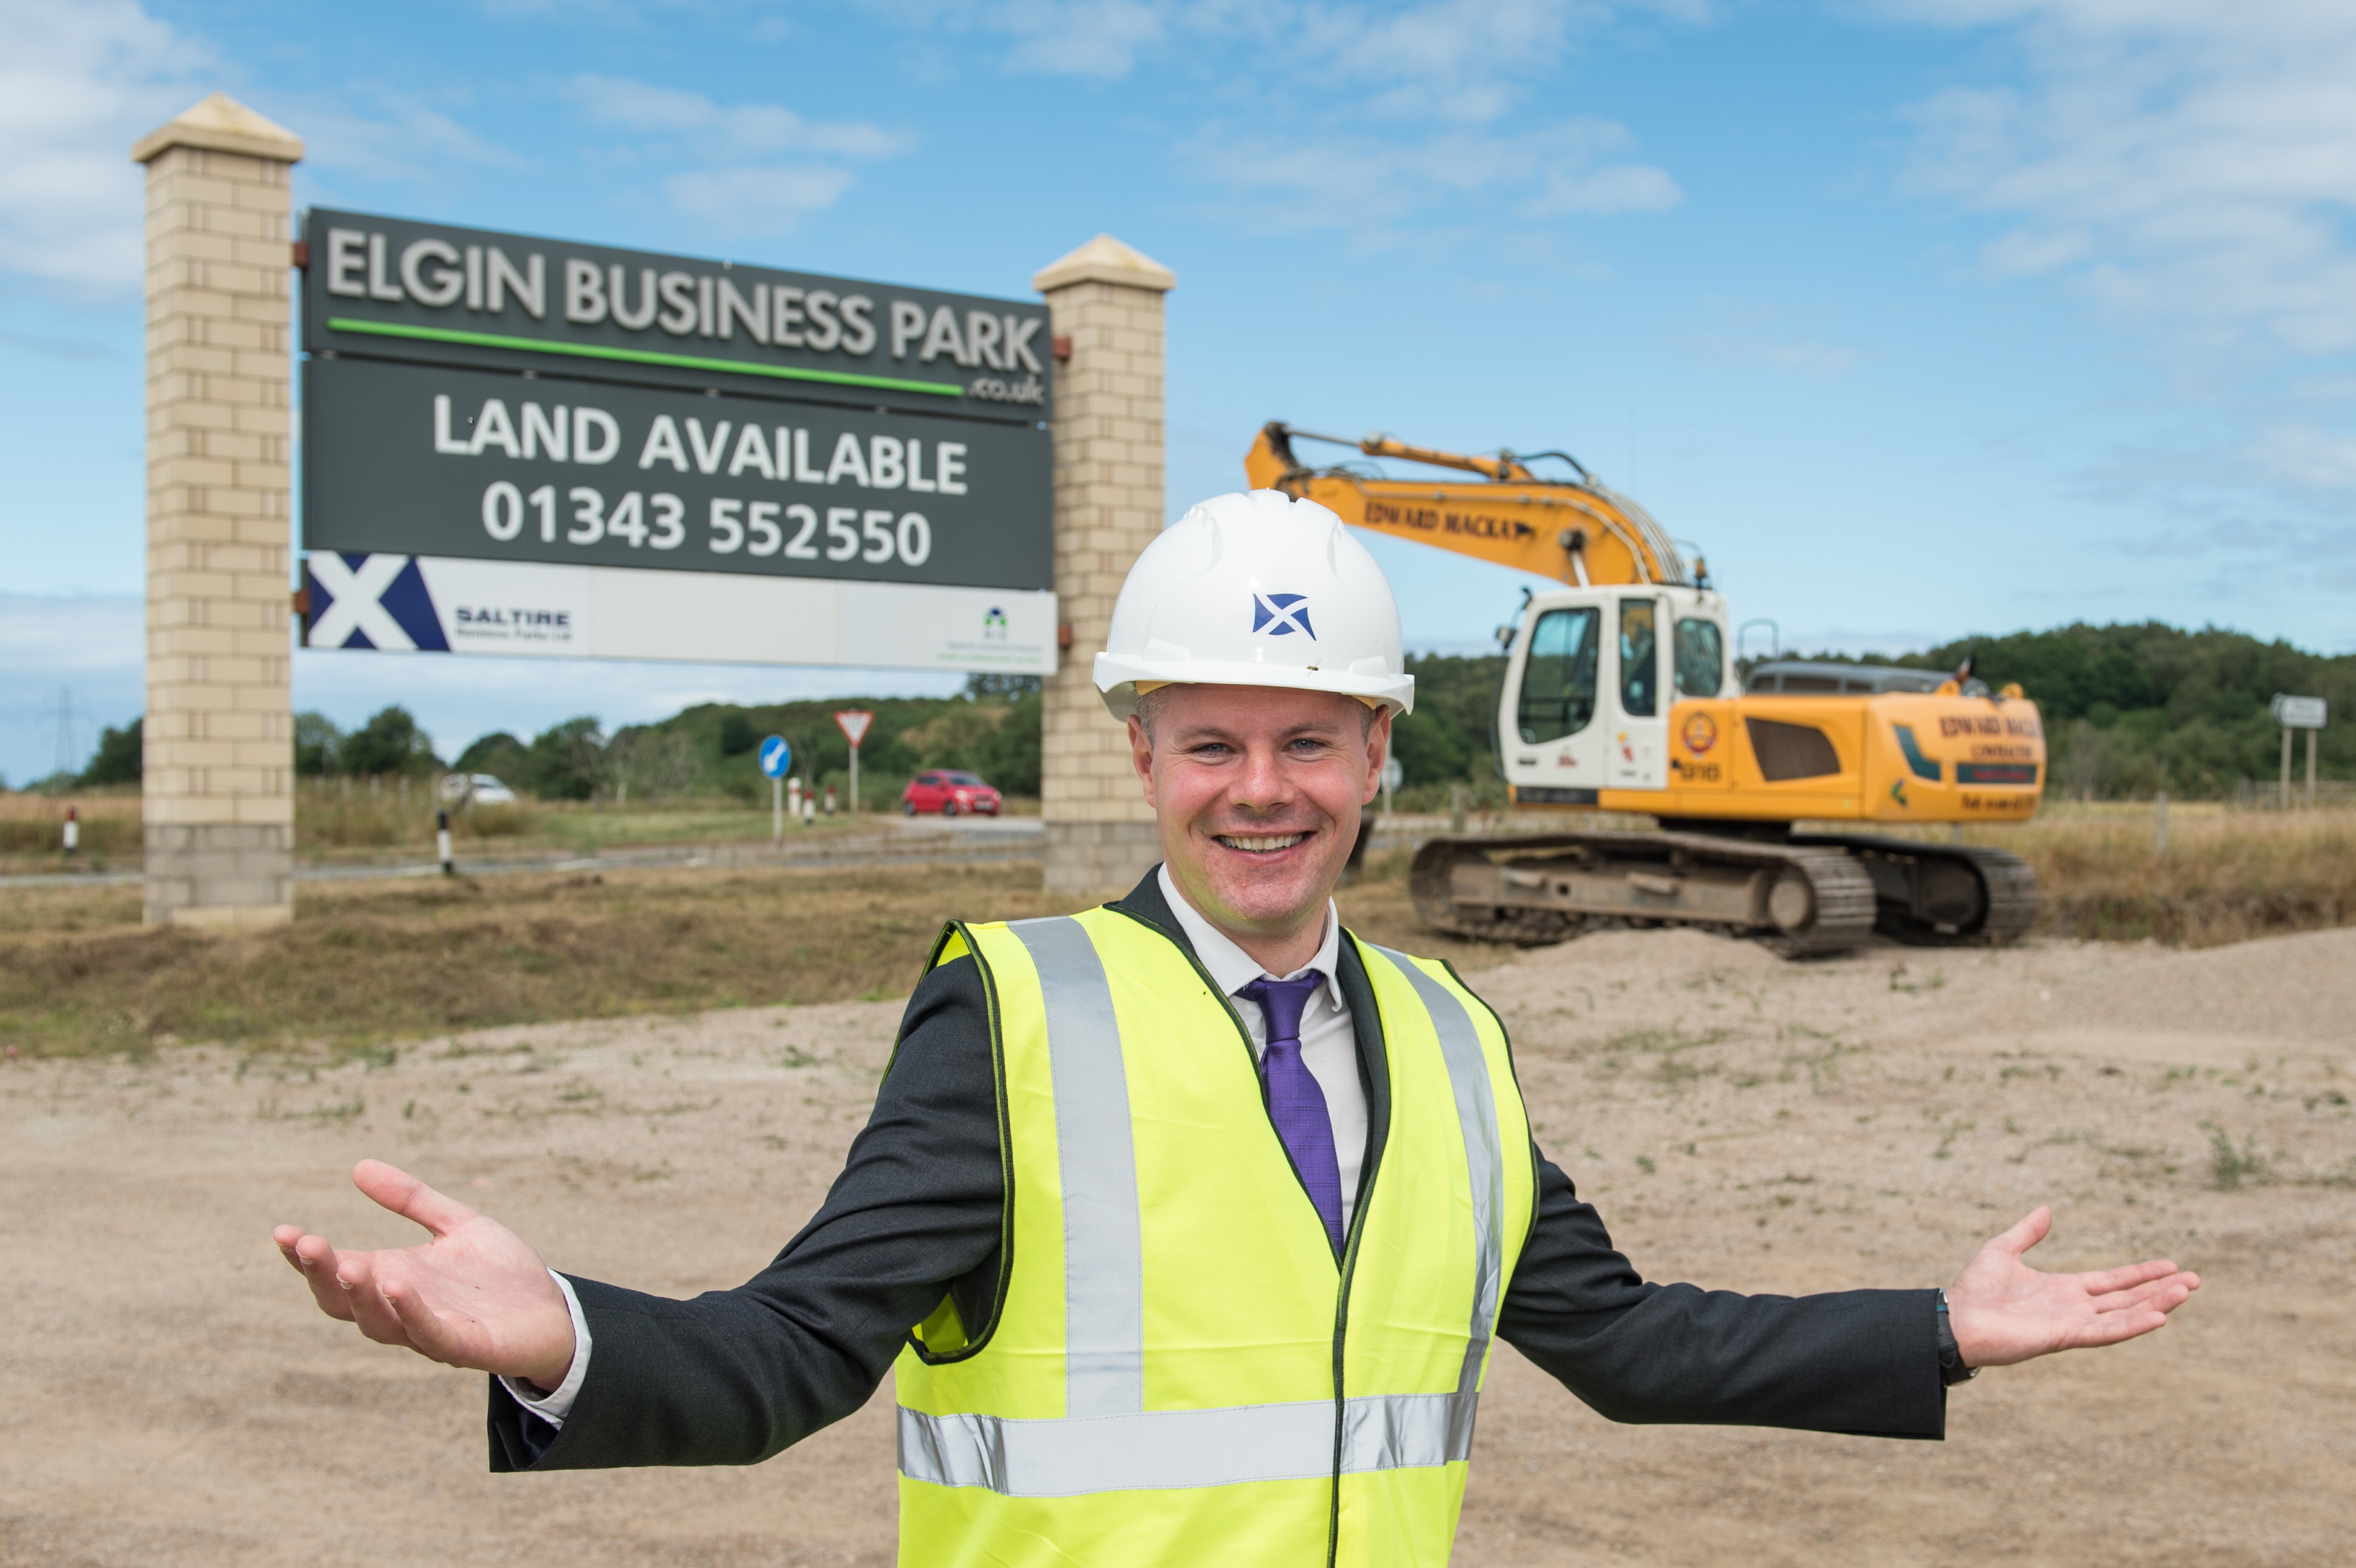 The Scottish Government's Finance Minister Derek Mackay visits Elgin Business Park.